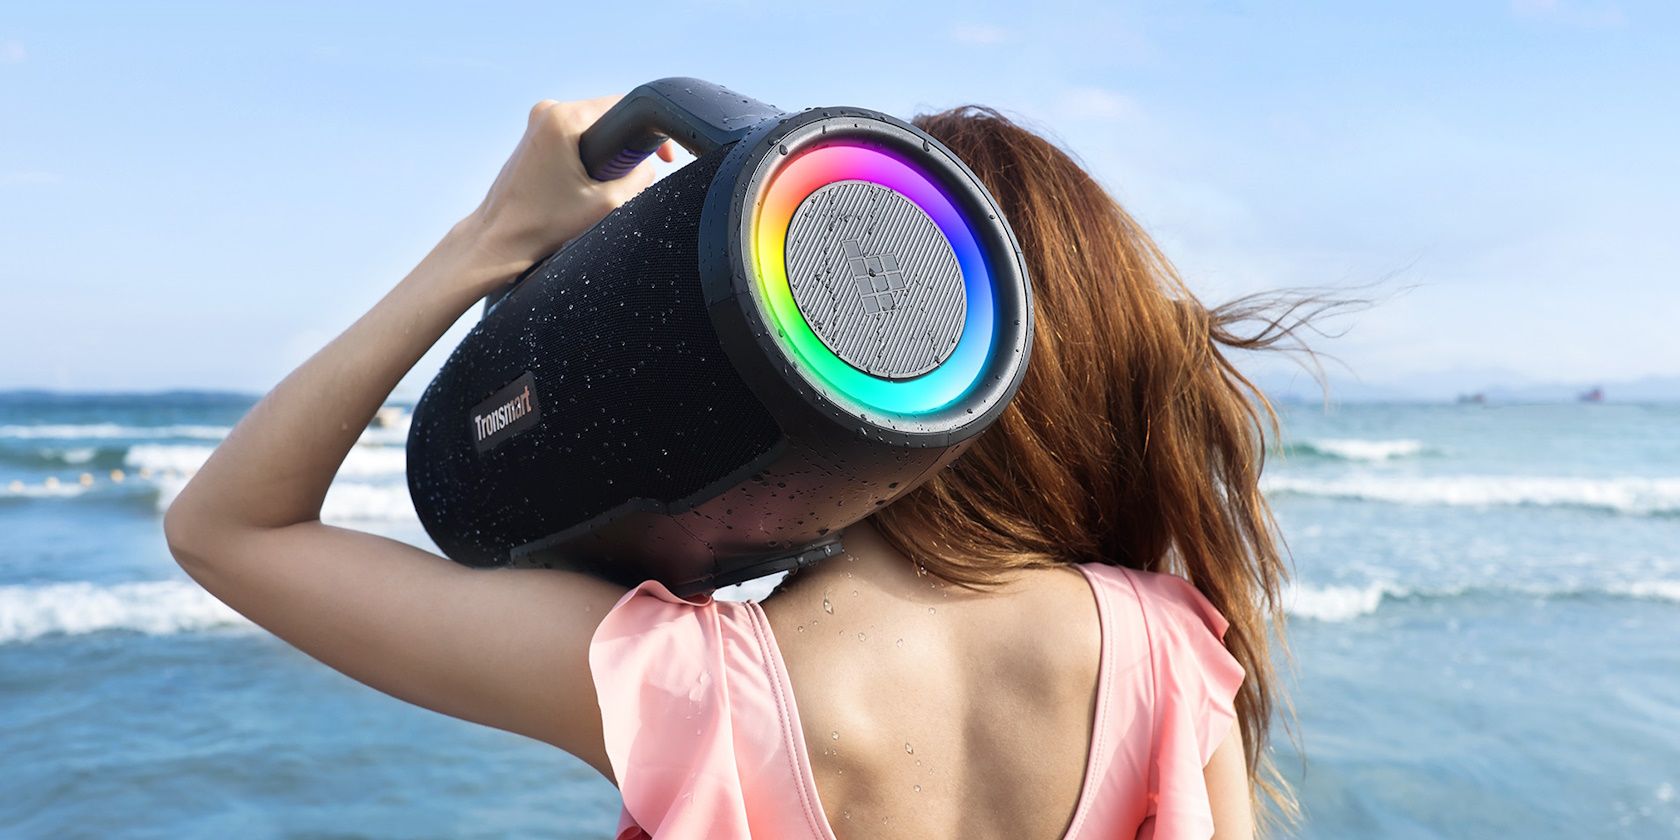 tronsmart bang max speaker on woman's shoulder at the beach